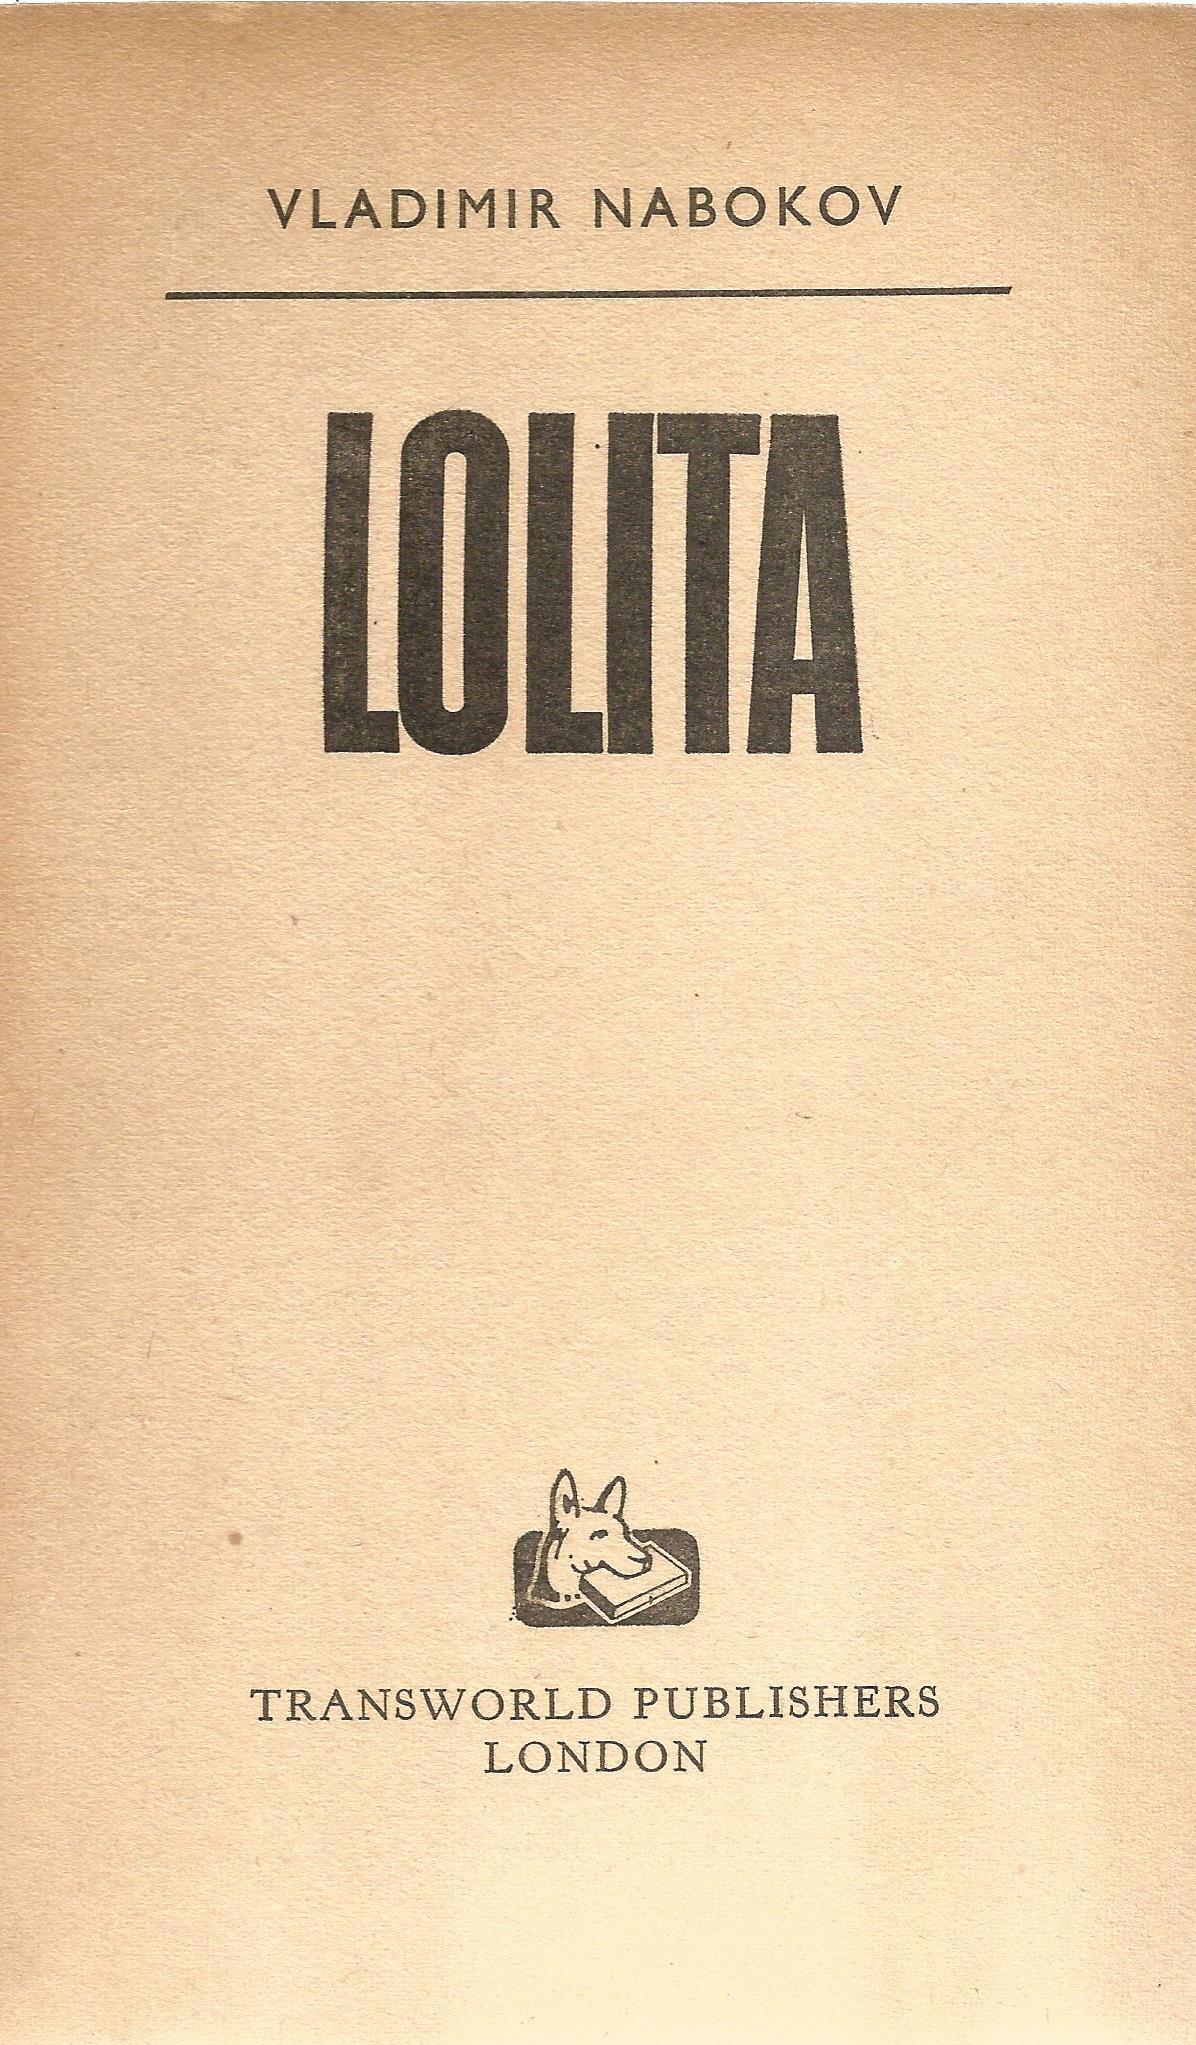 Lolita Complete and Unabridged by Vladimir Nabokov First Corgi Edition 1961 Softback Book - Image 2 of 3